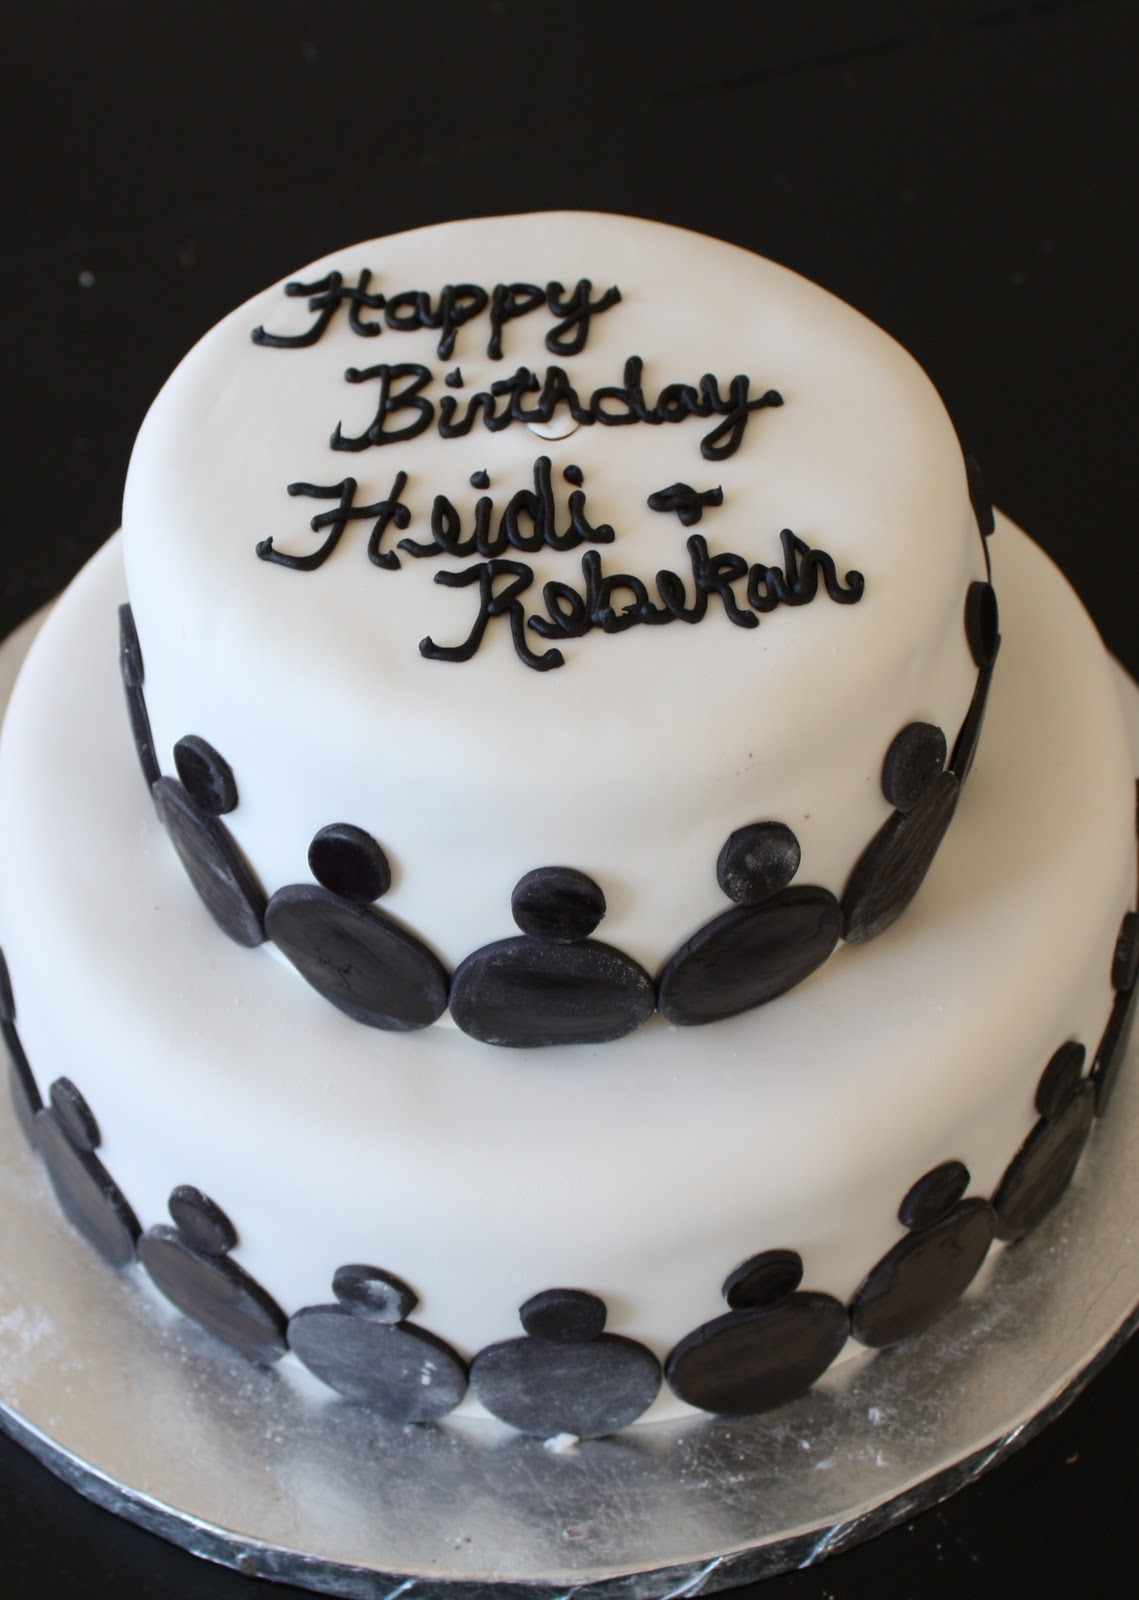 Cakes By Casey: Happy Birthday Heidi and Rebekah!